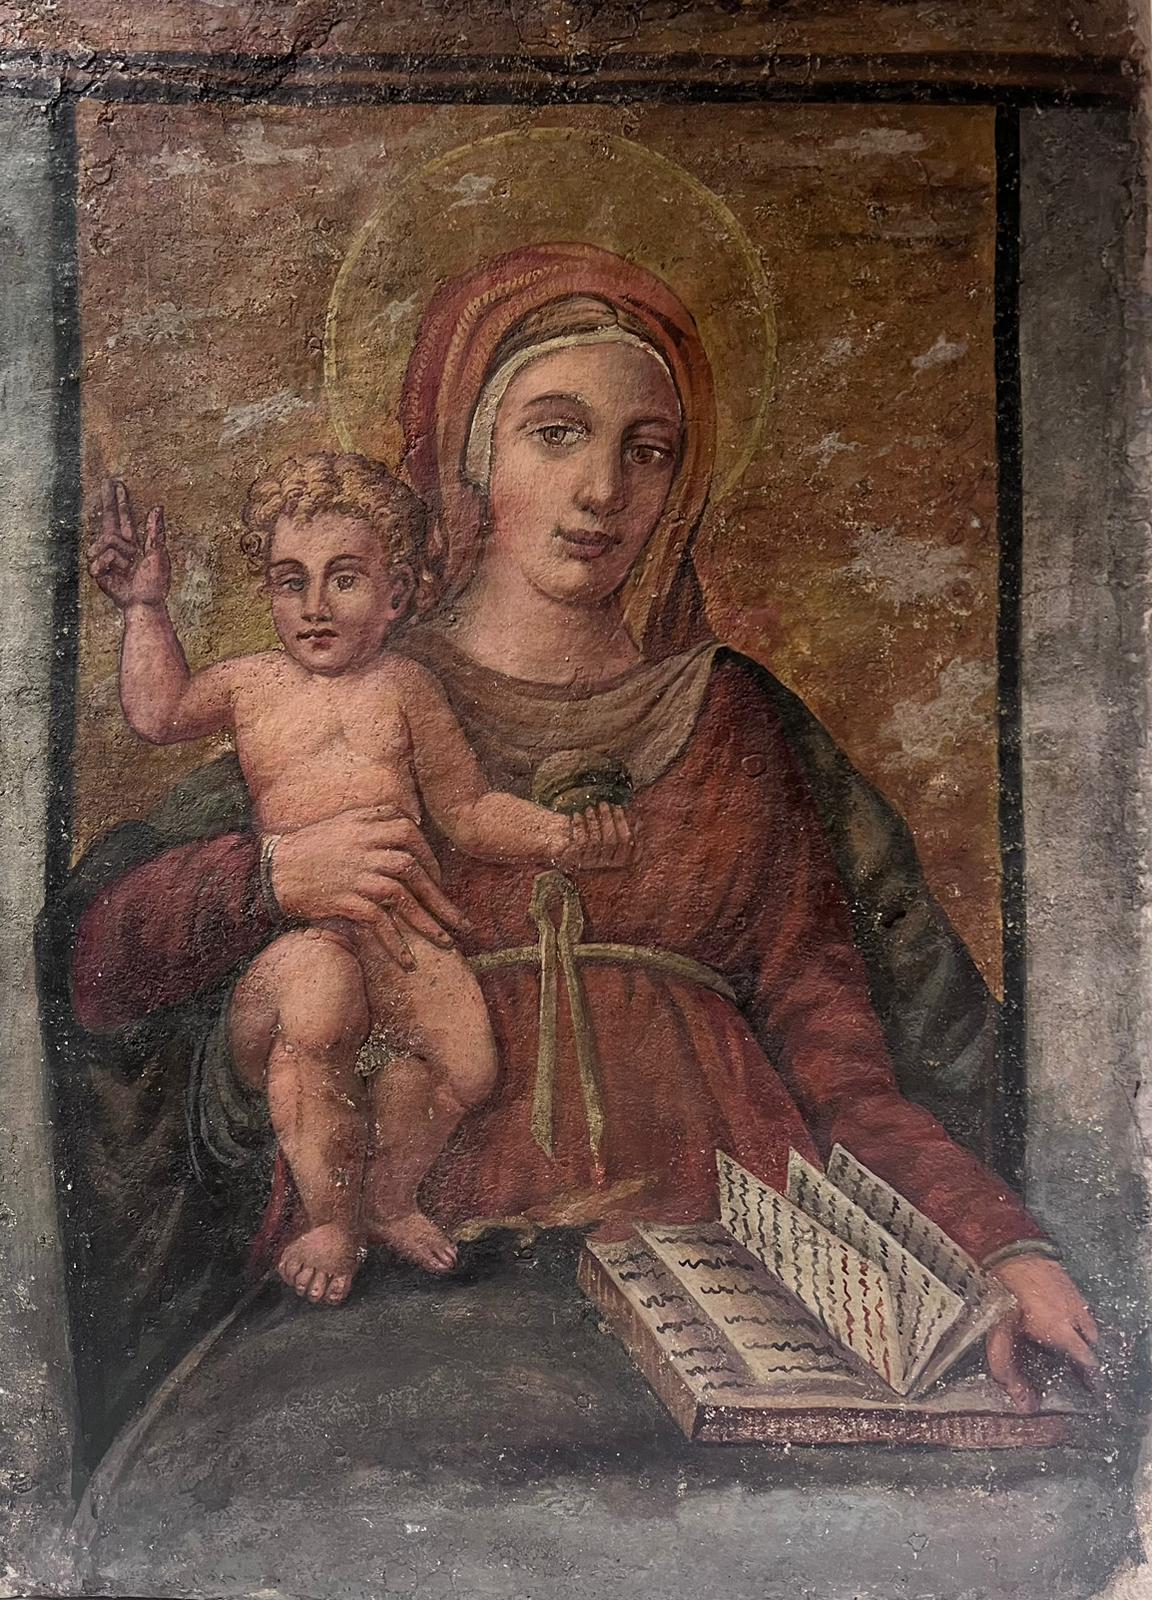 19th century Italian School Portrait Painting - Renaissance Style Italian Old Master Painting Madonna & Child Tender Embrace